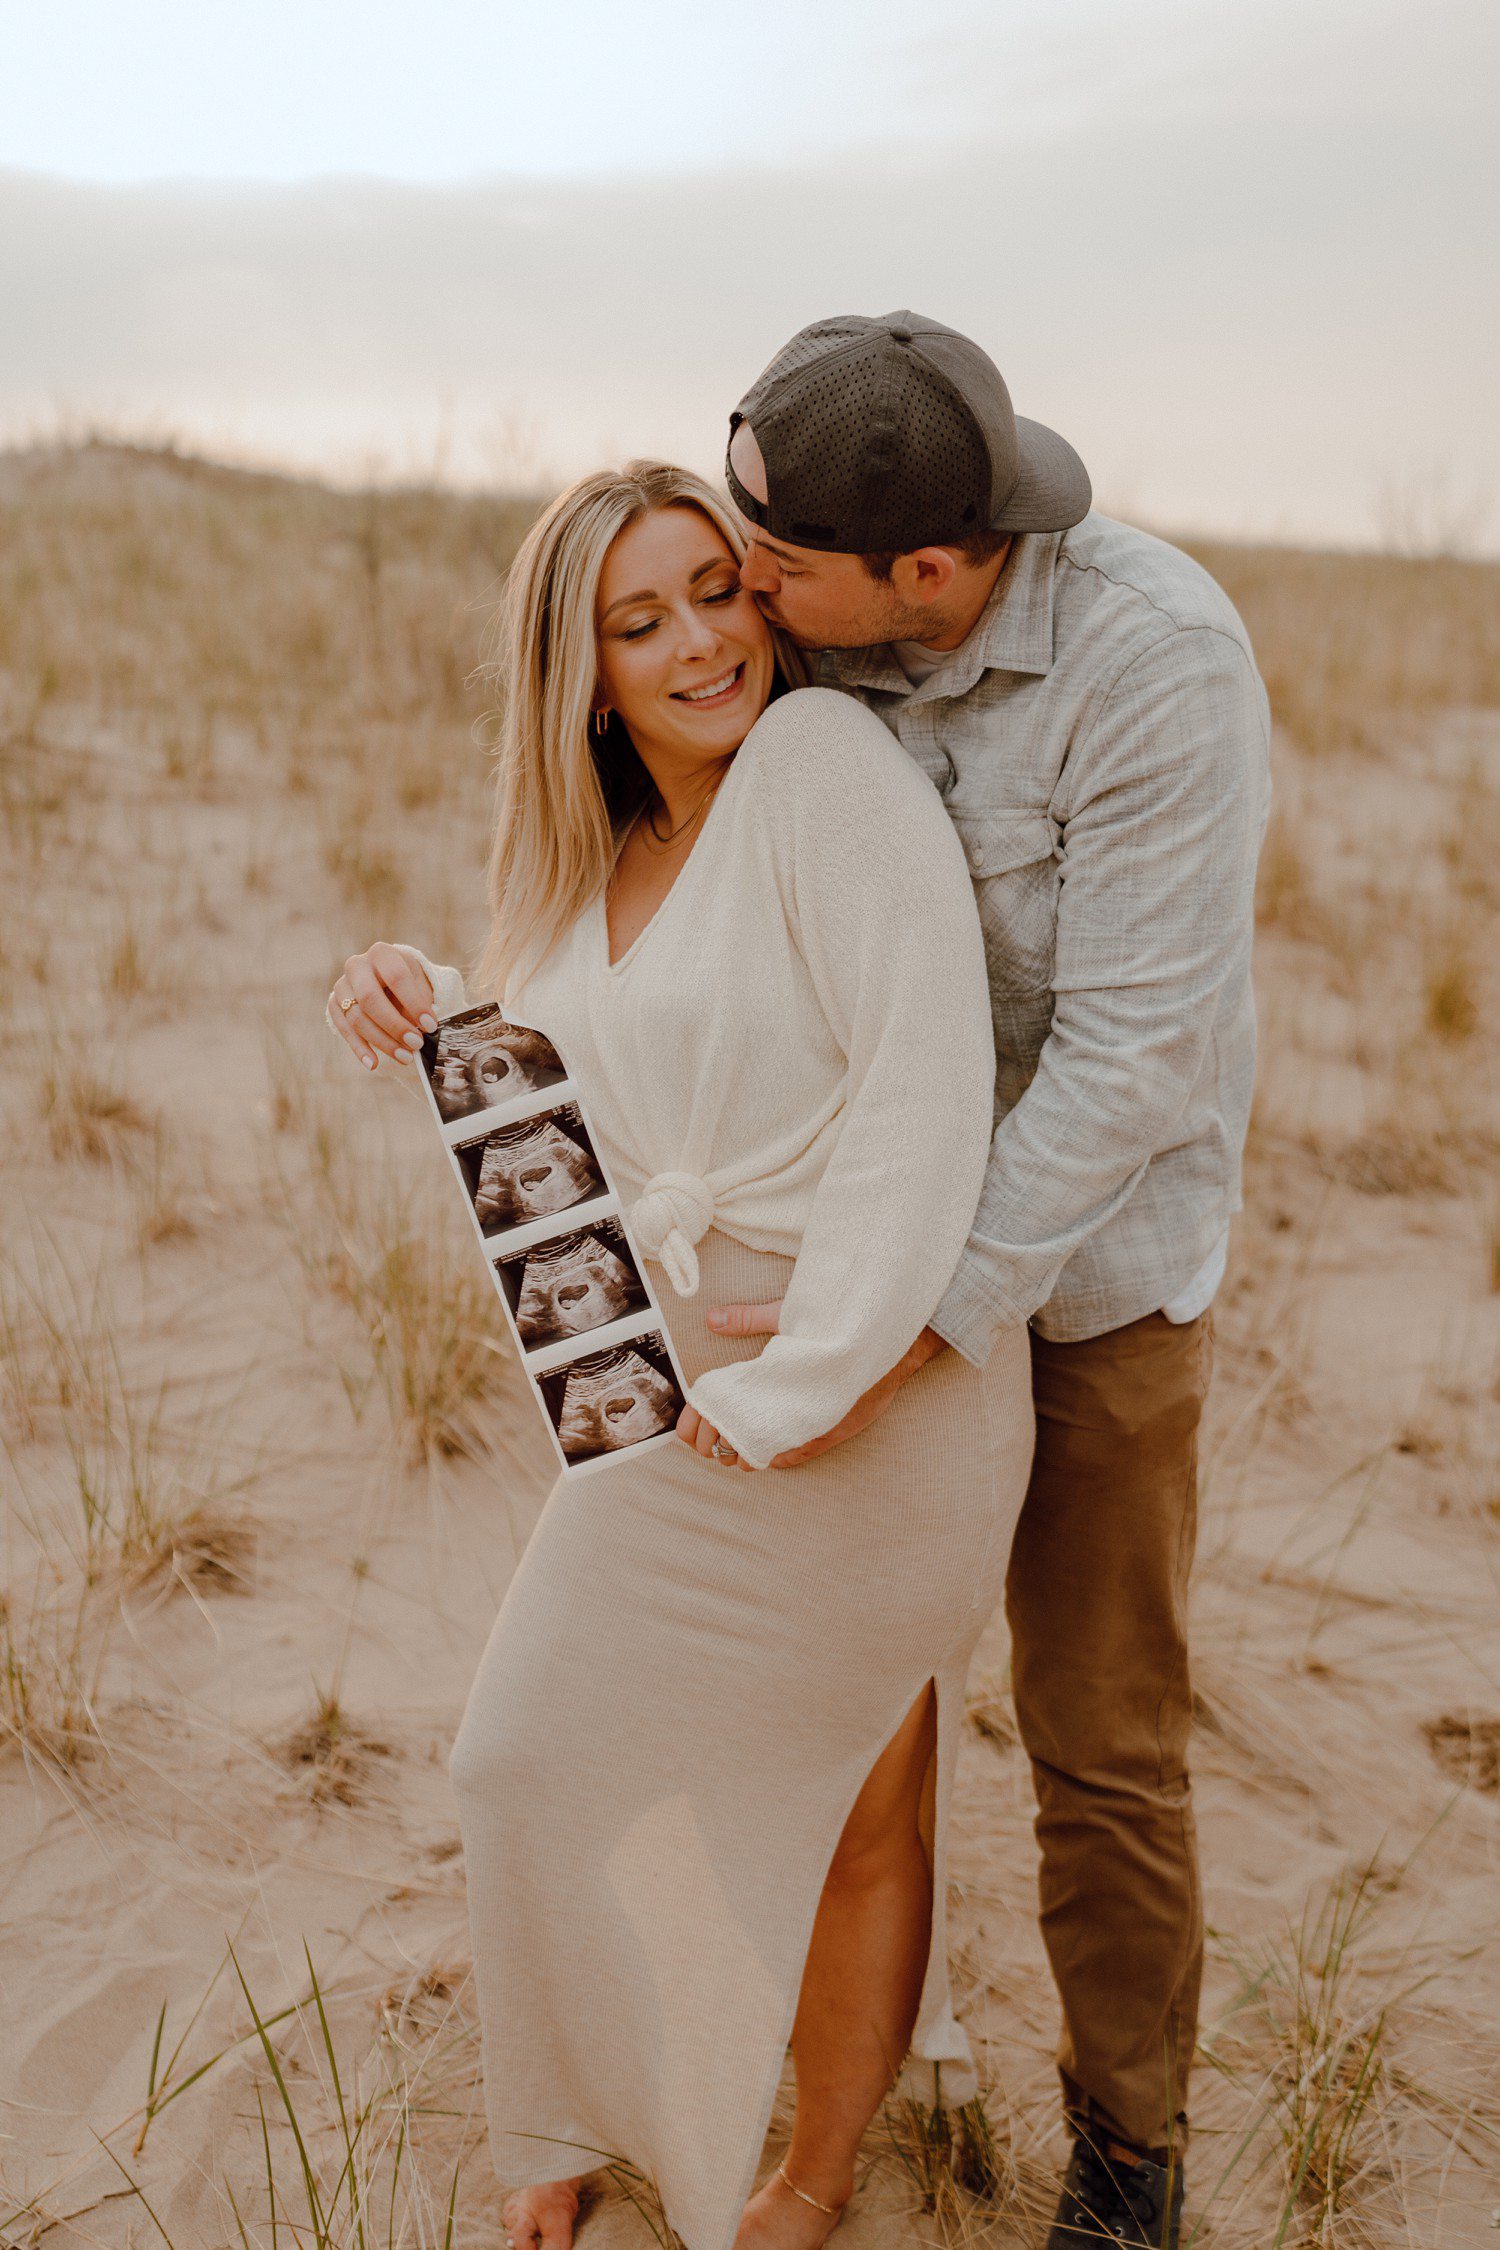 Pregnancy announcement photos at Grand Haven Beach Michigan. 